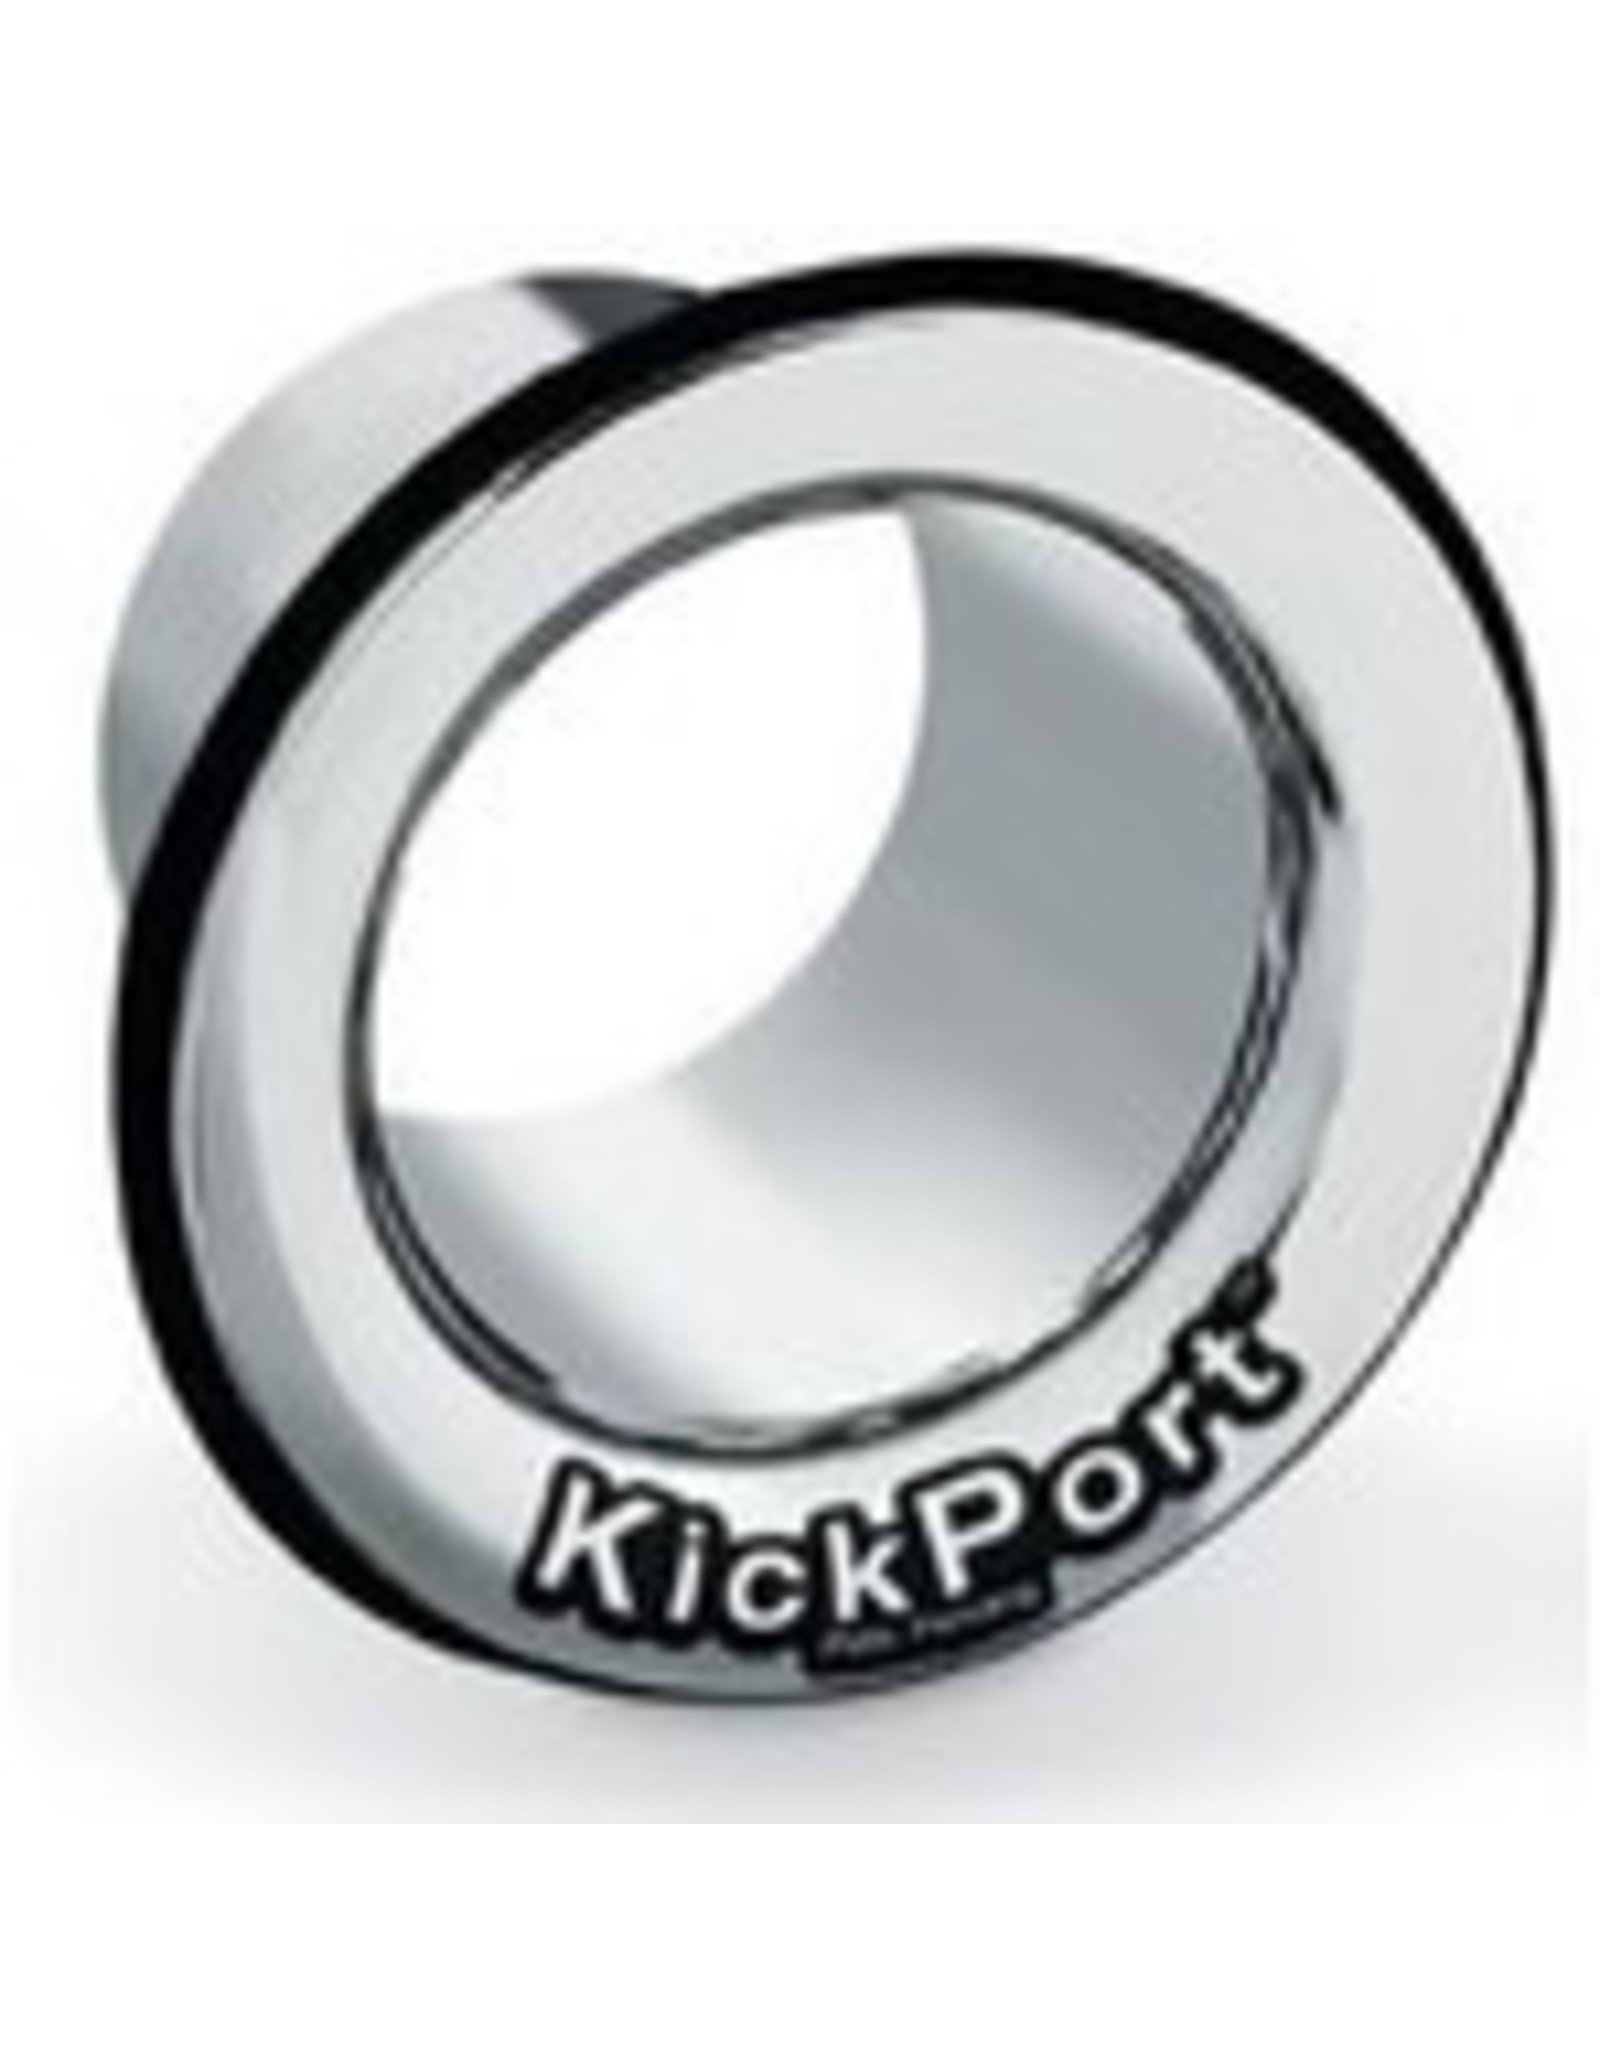 Kickport  KP2_C CHROME damping control bass booster